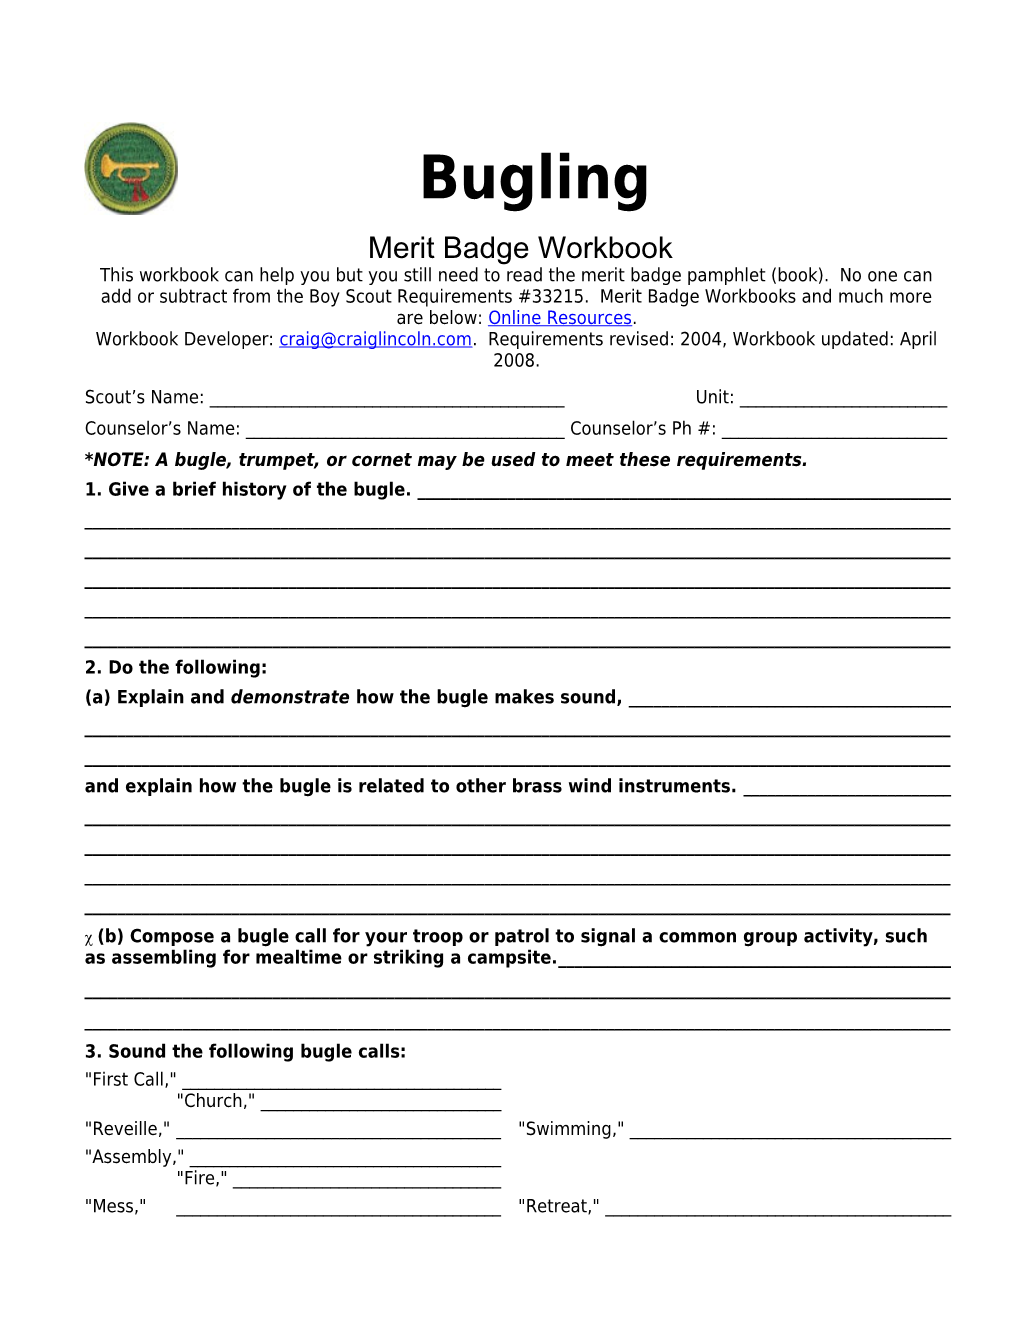 Bugling P. 1 Merit Badge Workbookscout's Name: ______